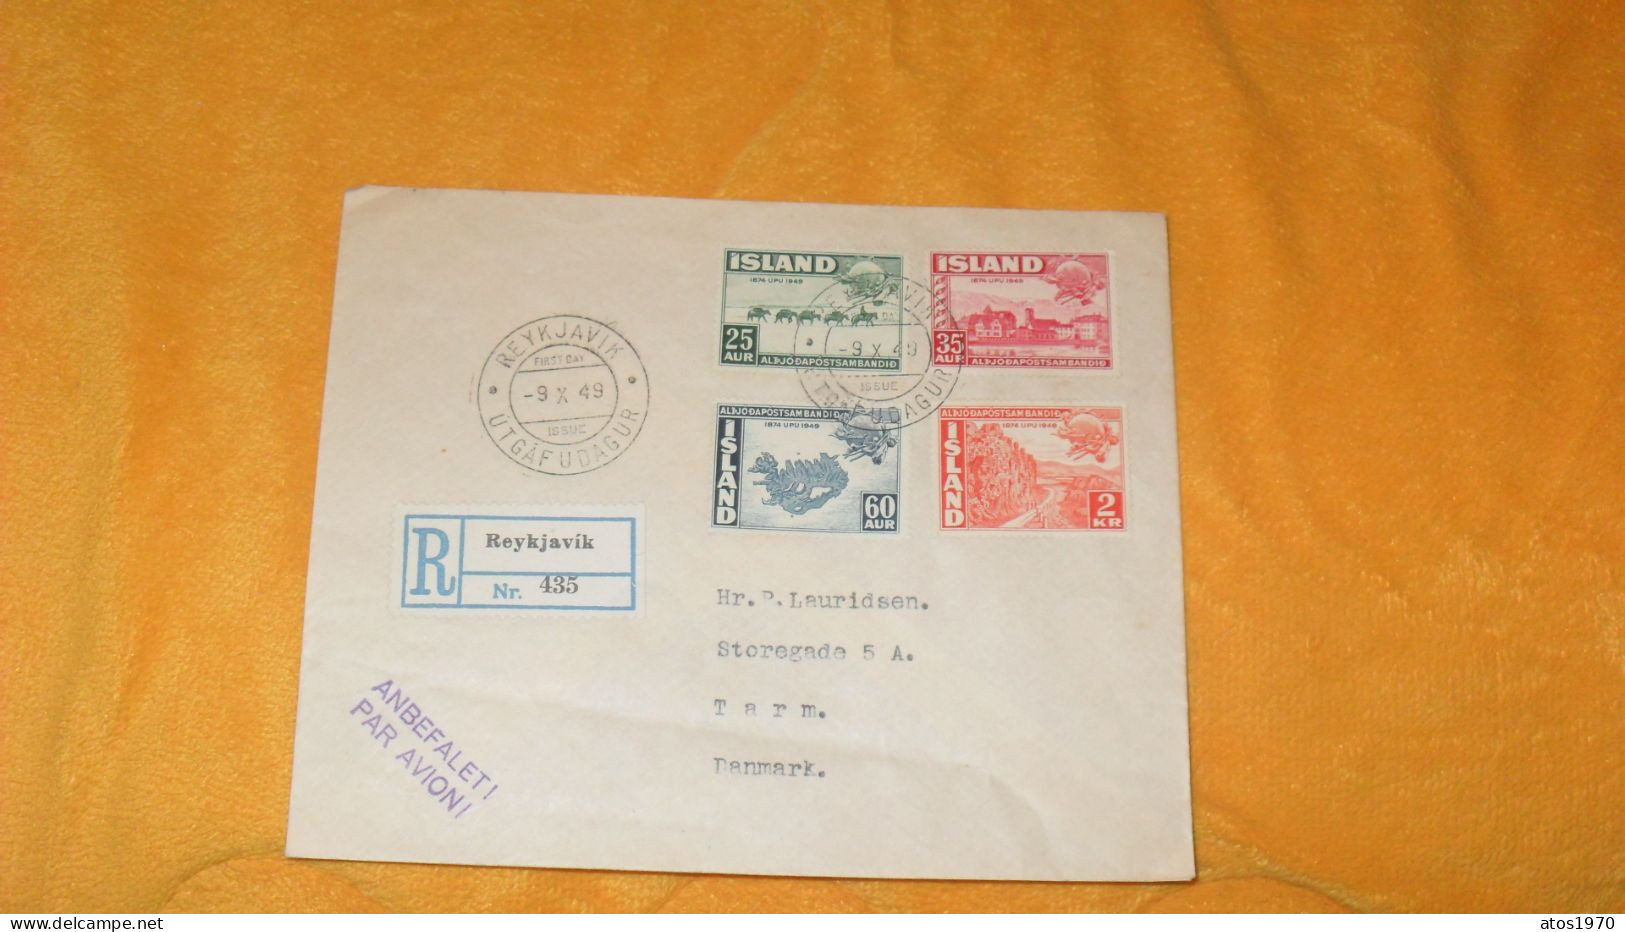 ENVELOPPE ANCIENNE DE 1949../ RECOMMANDE R N°435 REYKJAVIK ISLANDE POURV TARM DANEMARK CACHETS + TIMBRES X4 - Covers & Documents